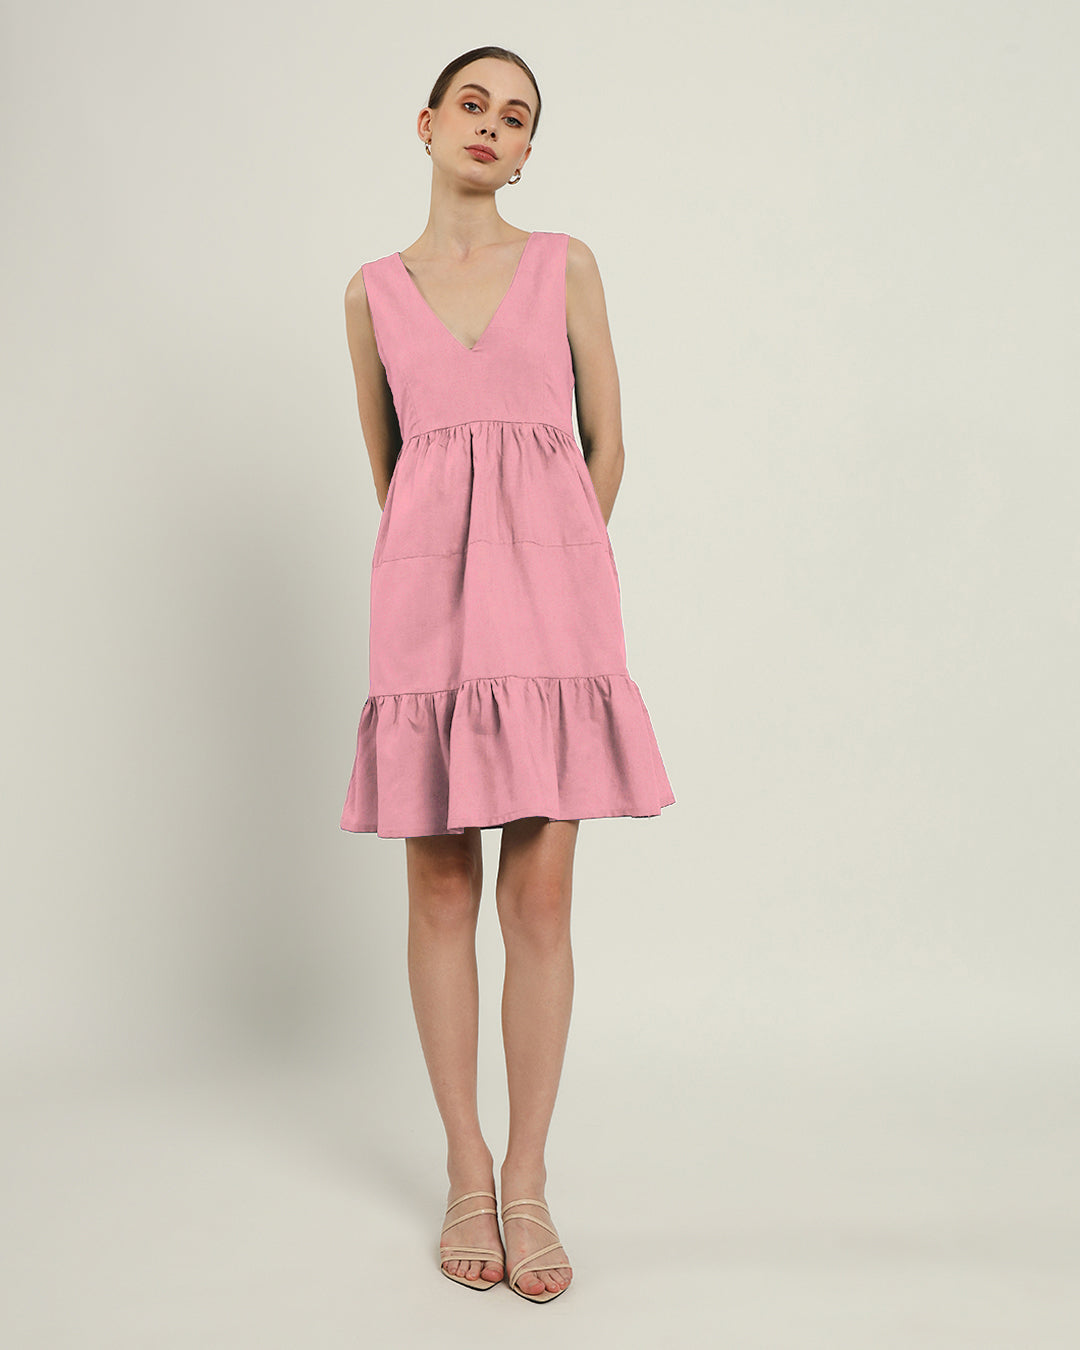 The Minsk Fondant Pink Dress